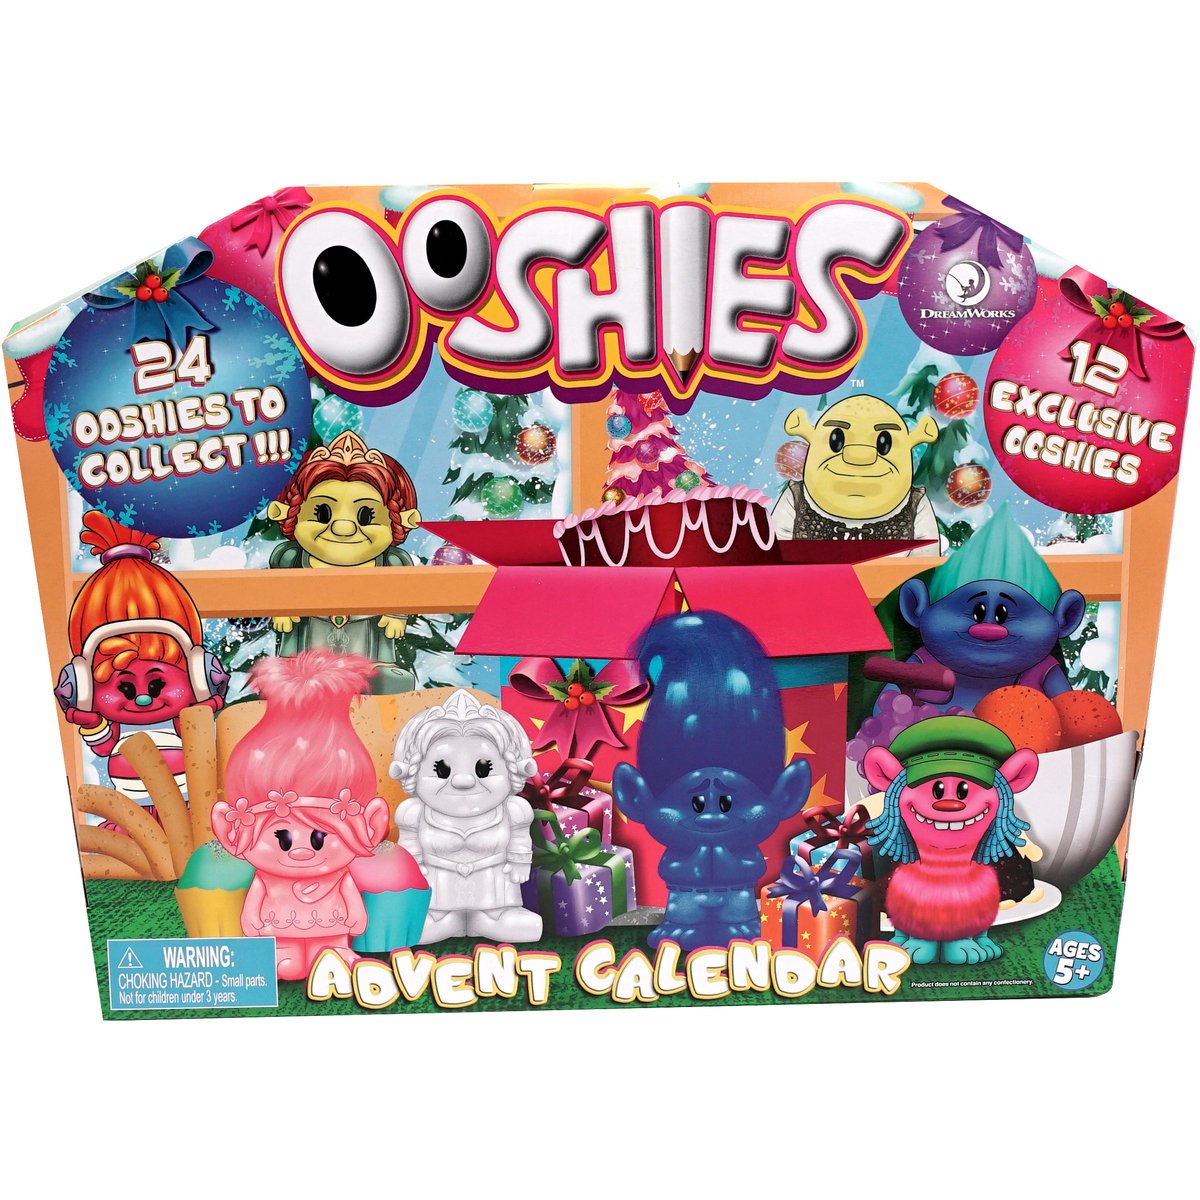 2018 toy advent calendar